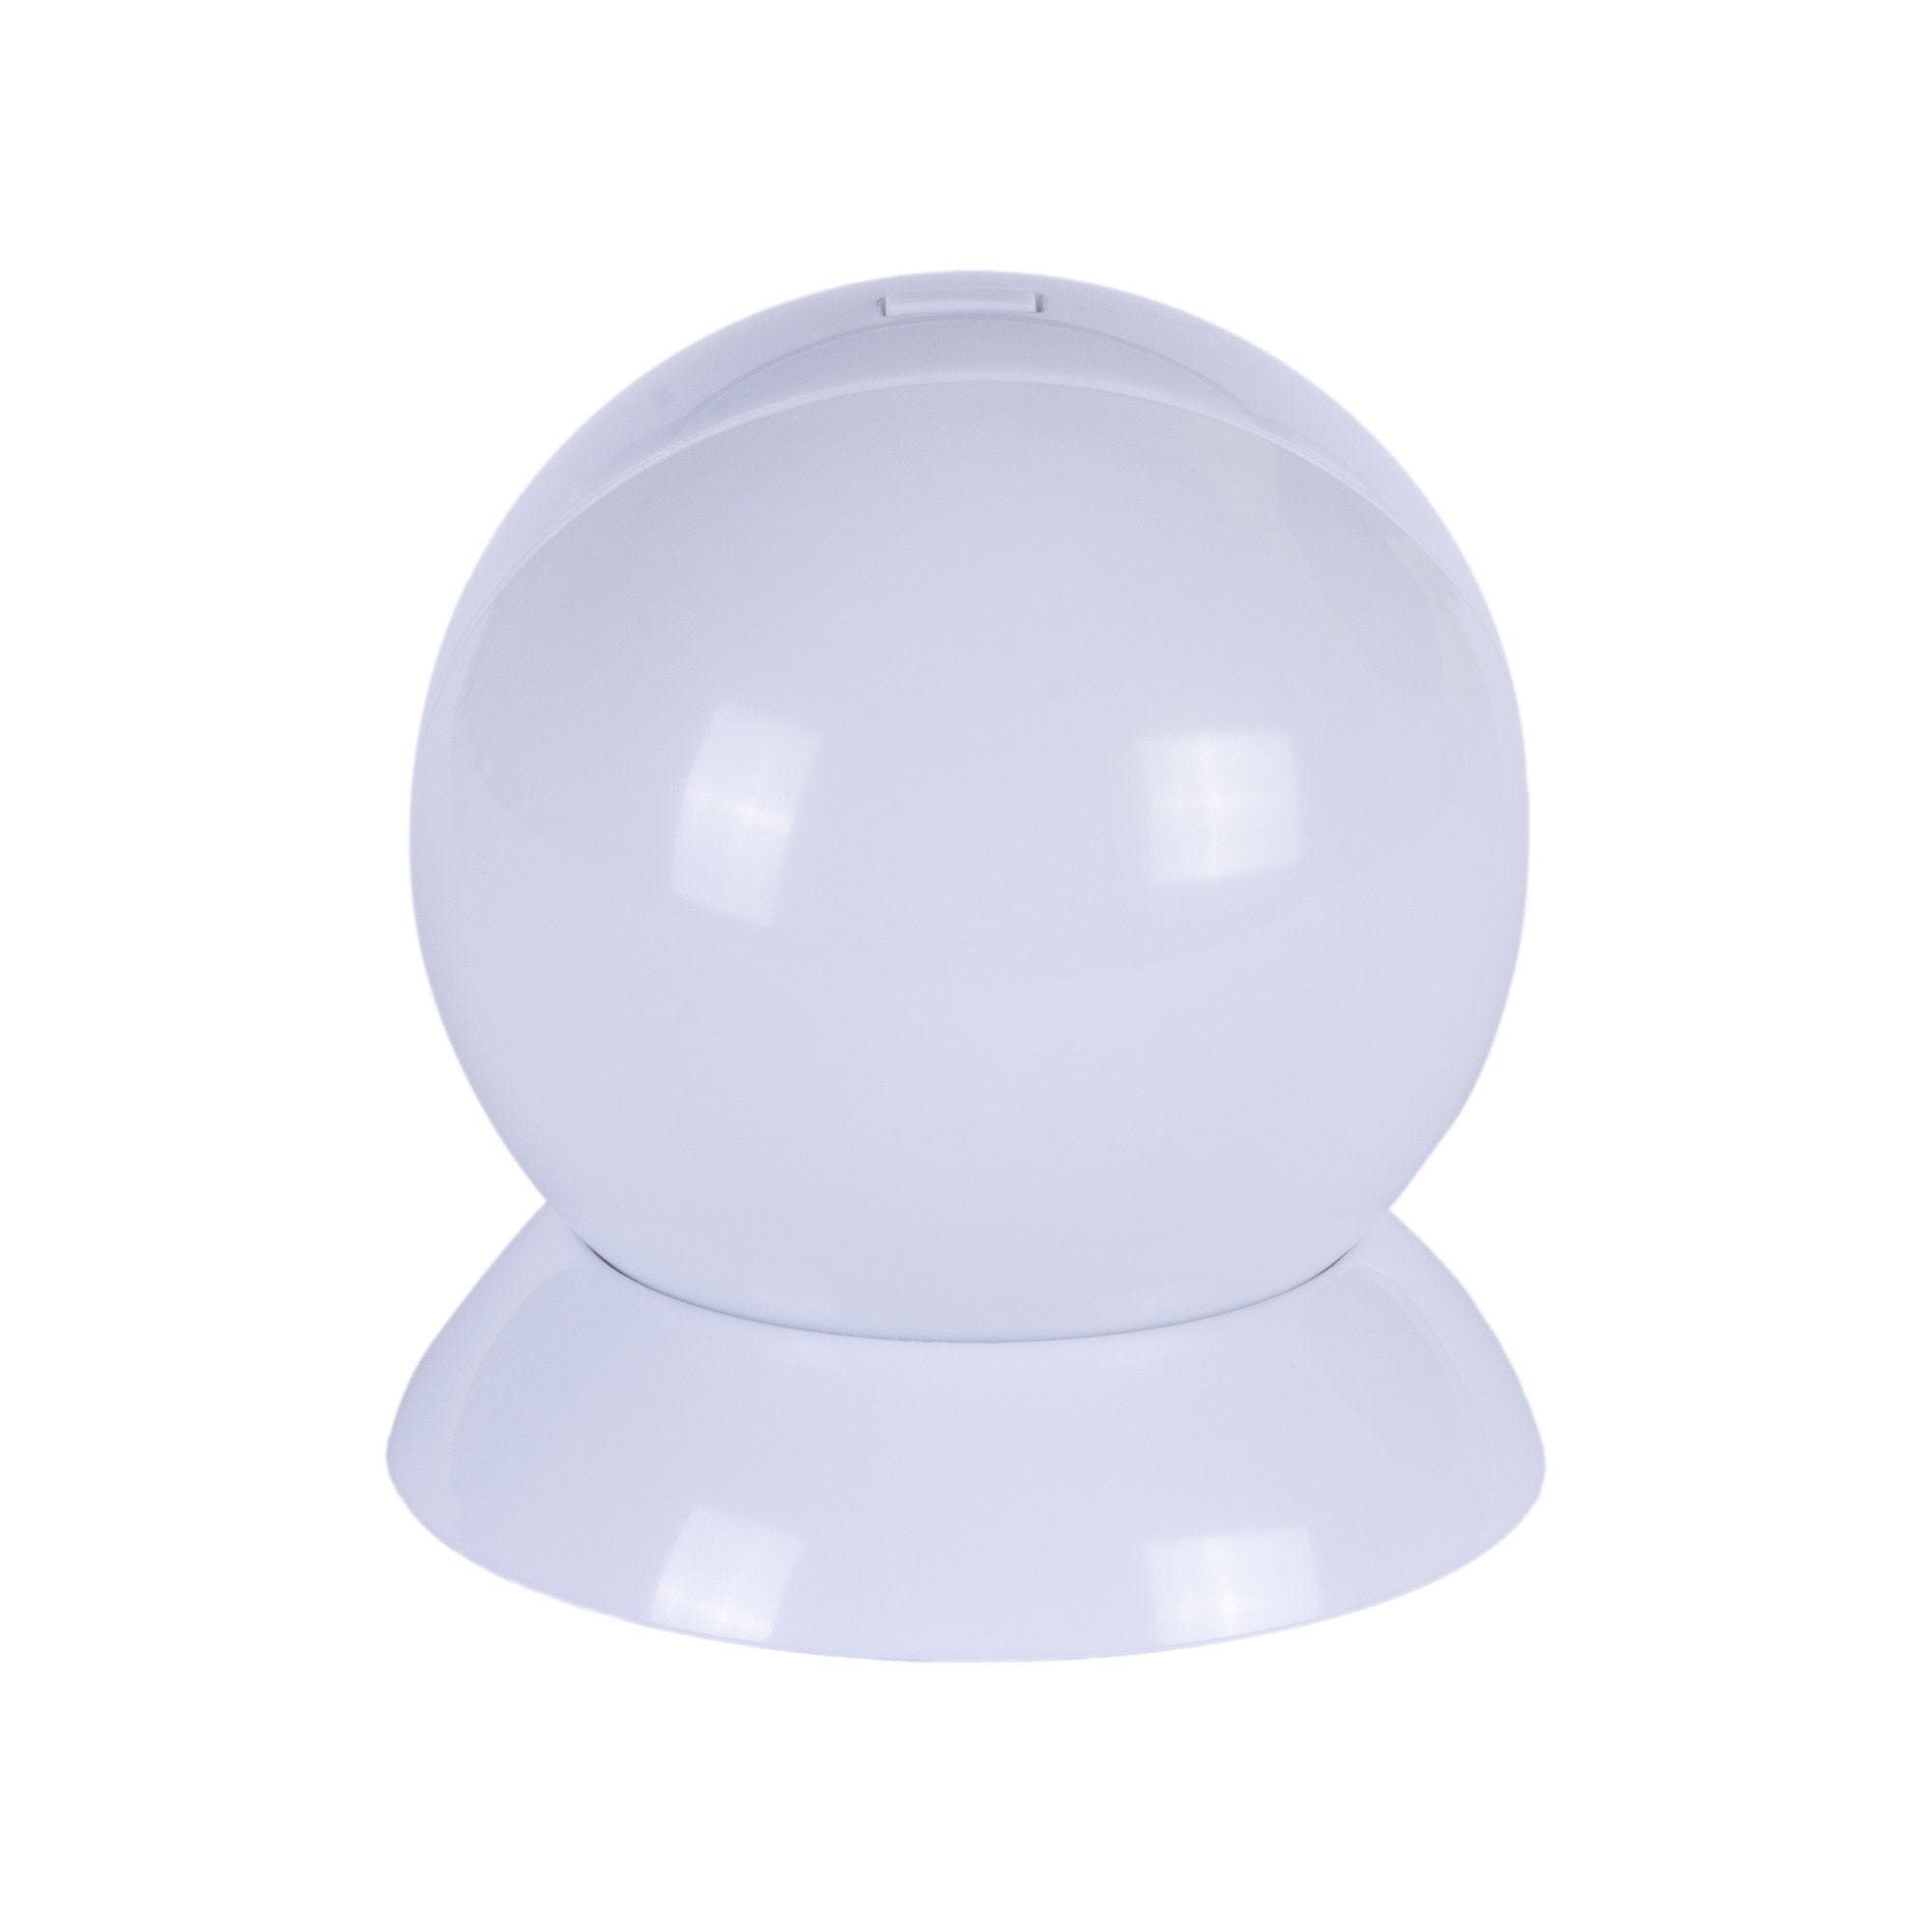 Brillar Electrical Wireless Swivel Ball Light BR0010